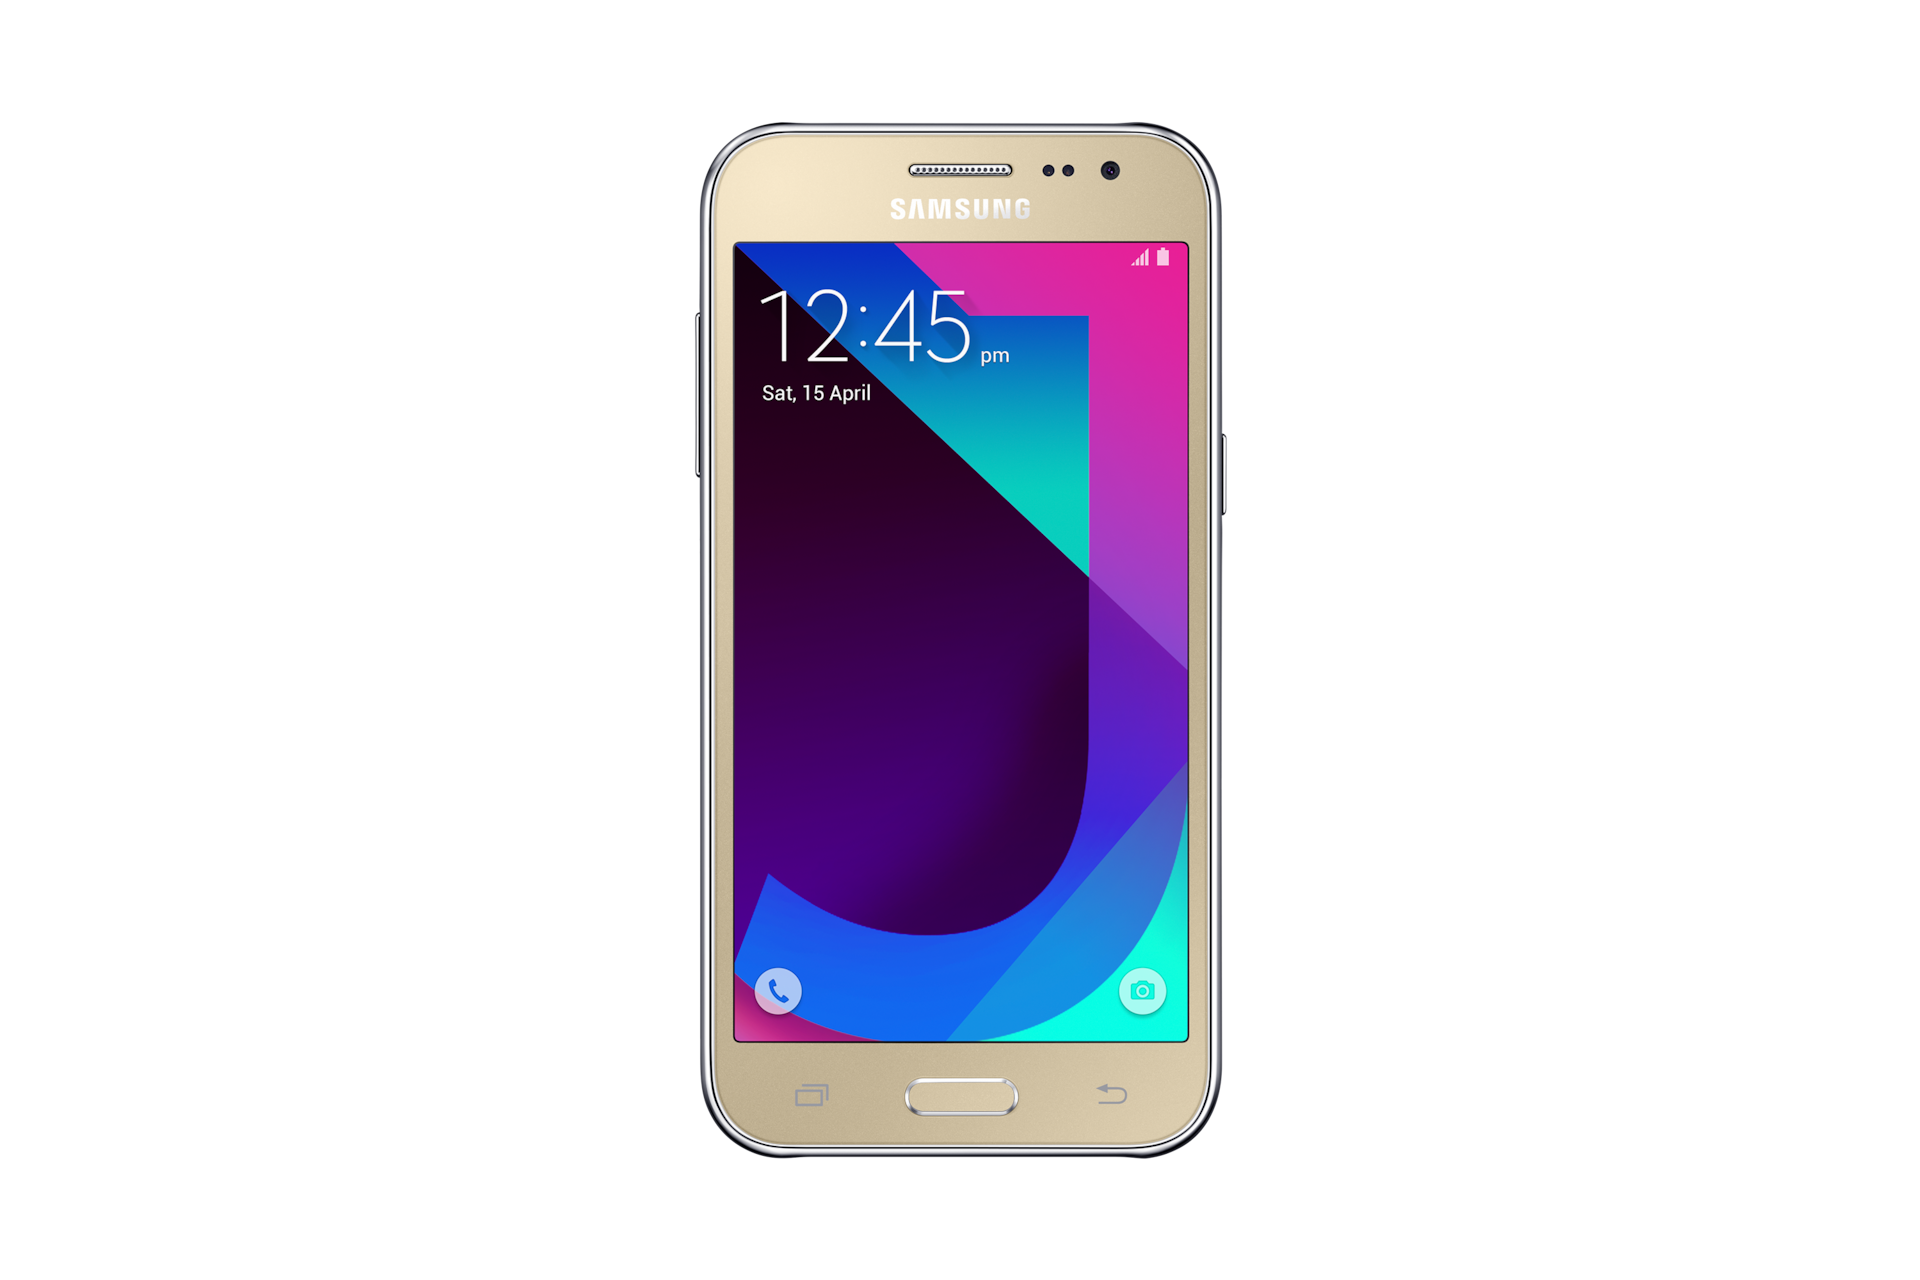 Actualizare Software Samsung Galaxy S2 Plus Info - guguvietnam